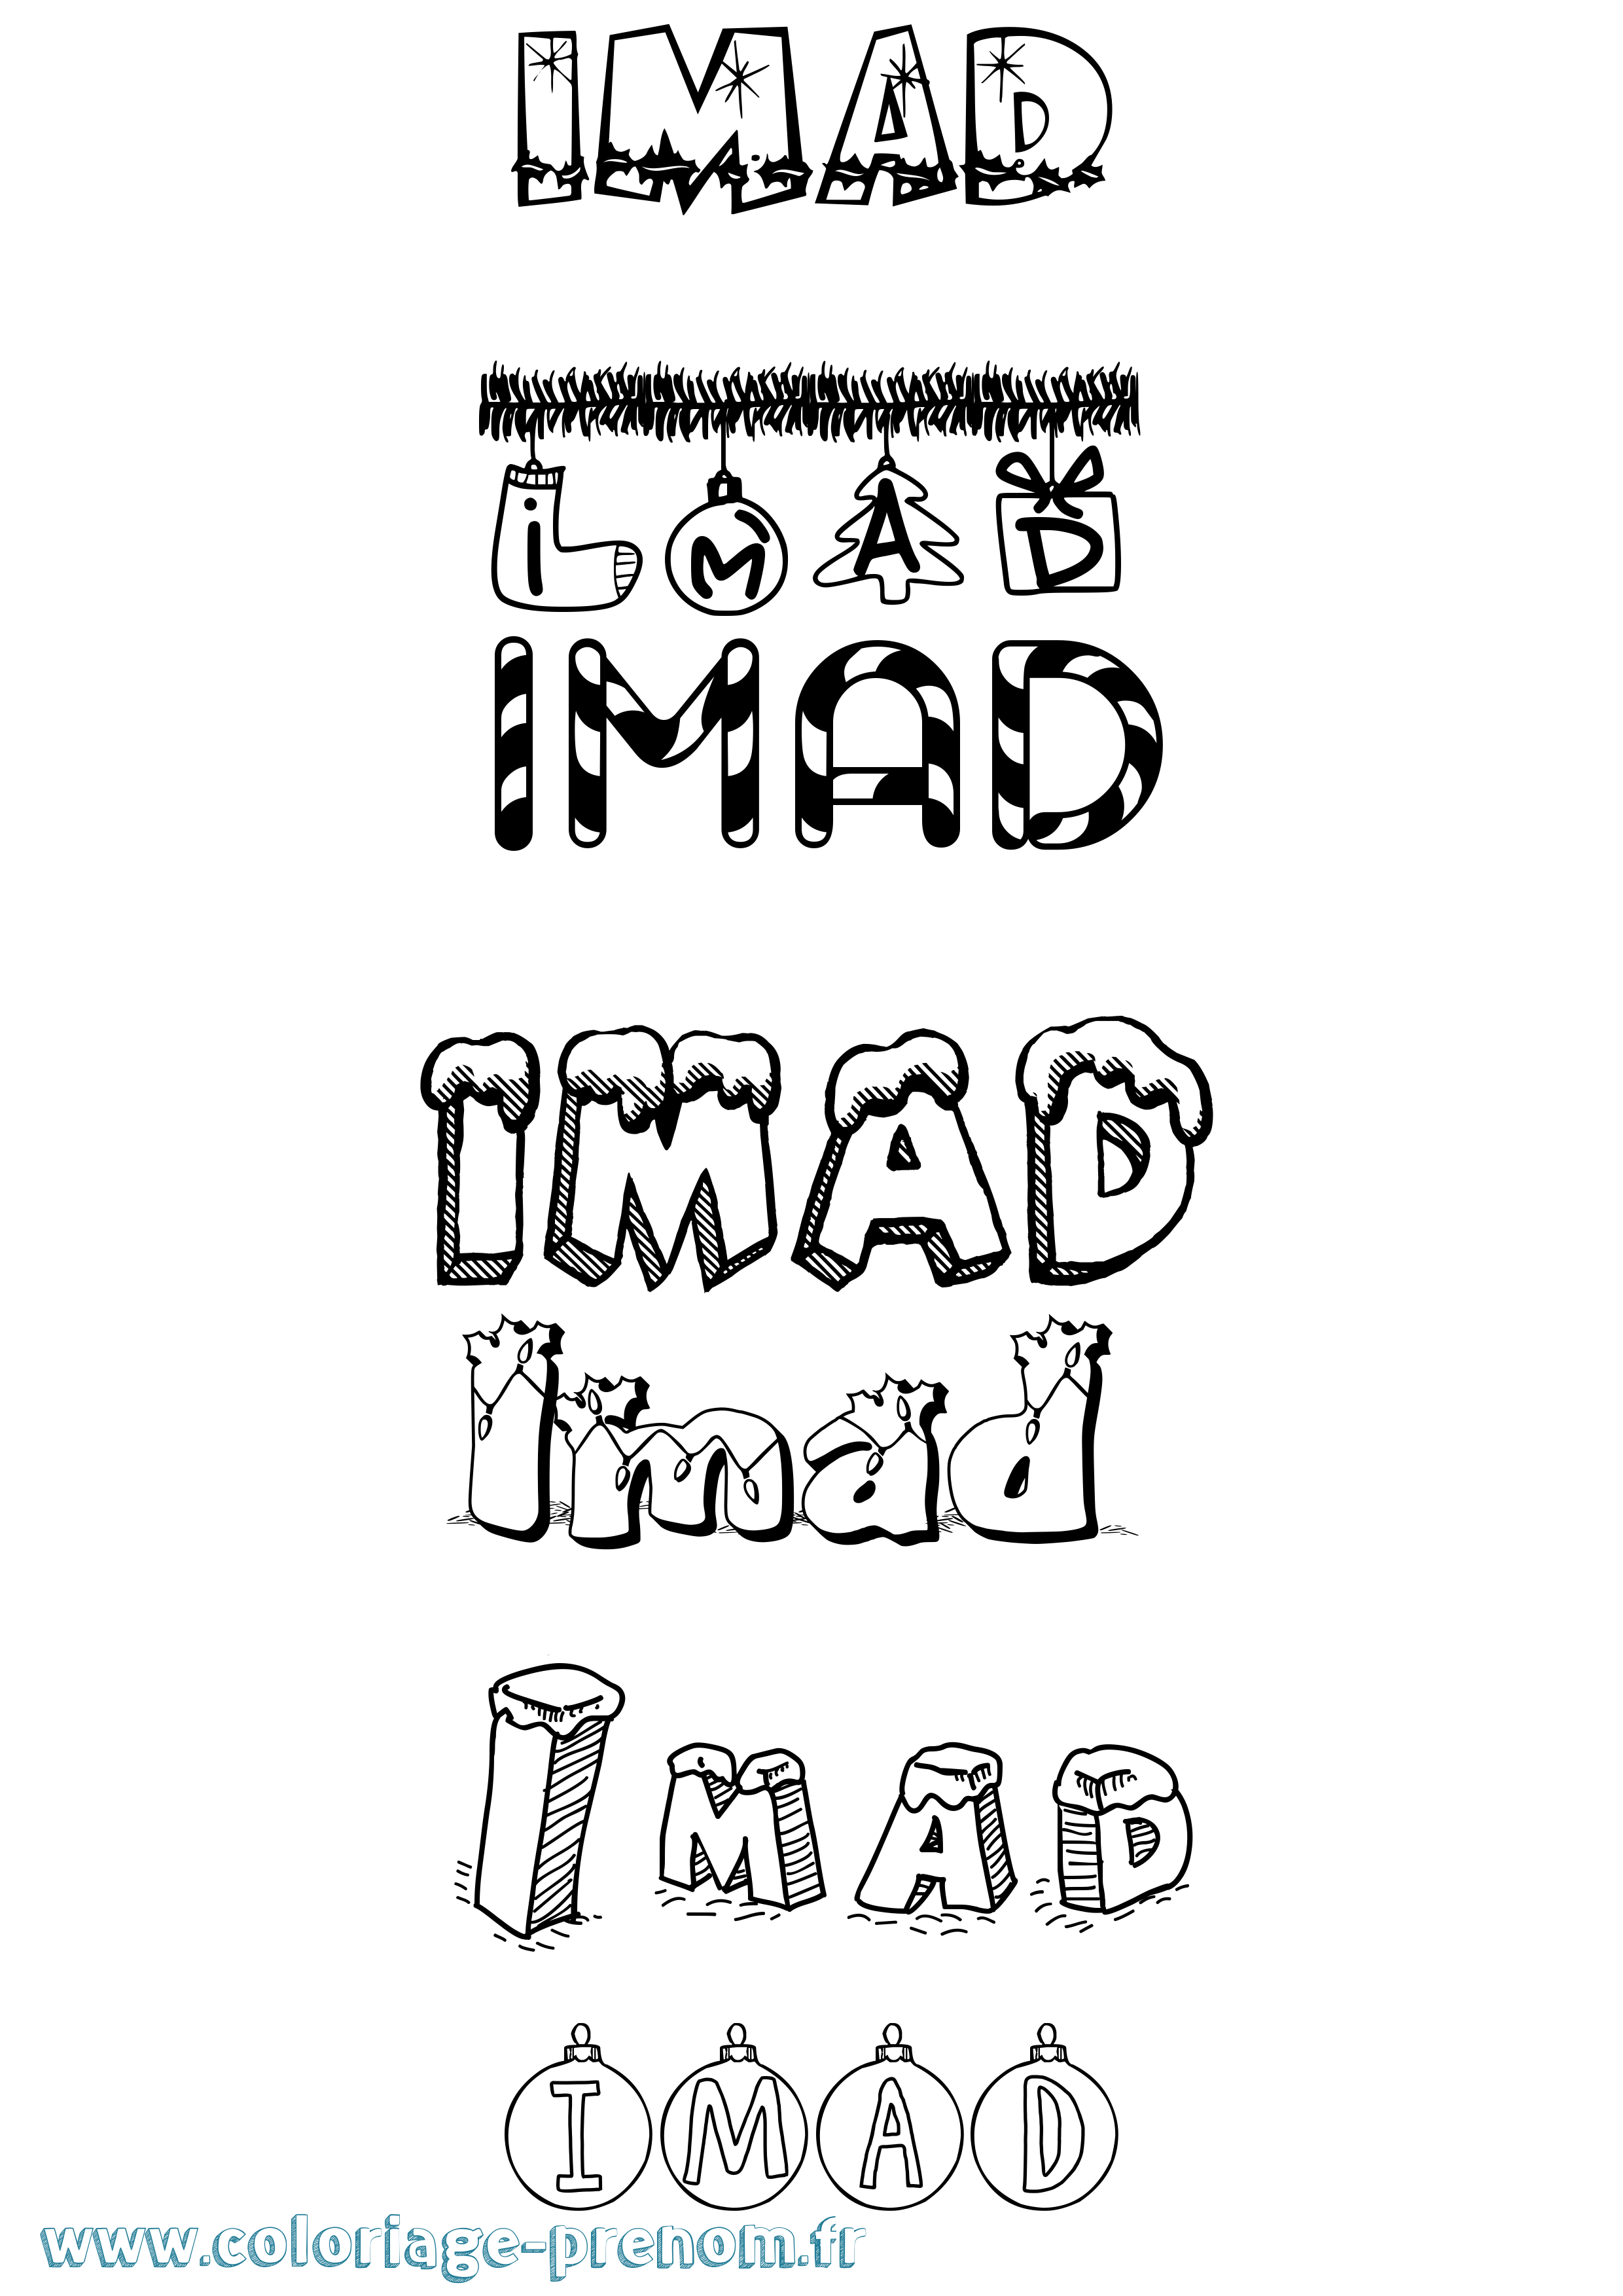 Coloriage prénom Imad